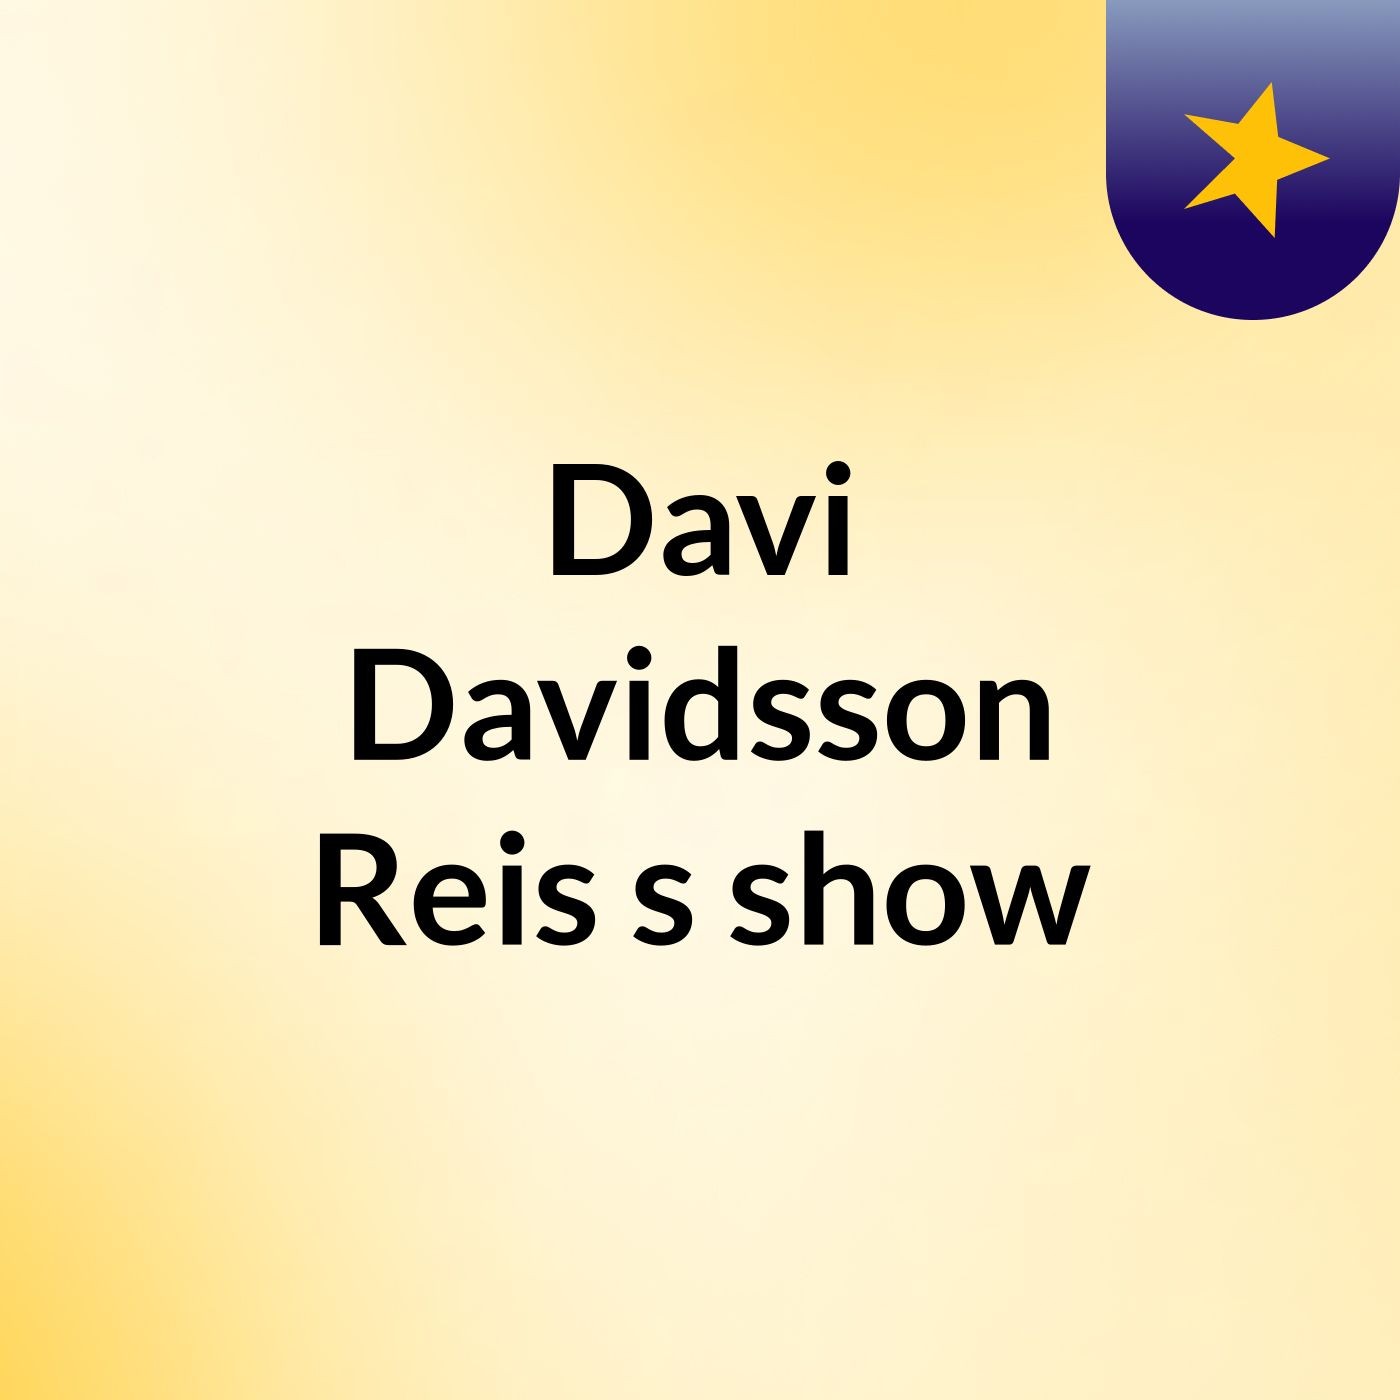 Davi Davidsson Reis's show